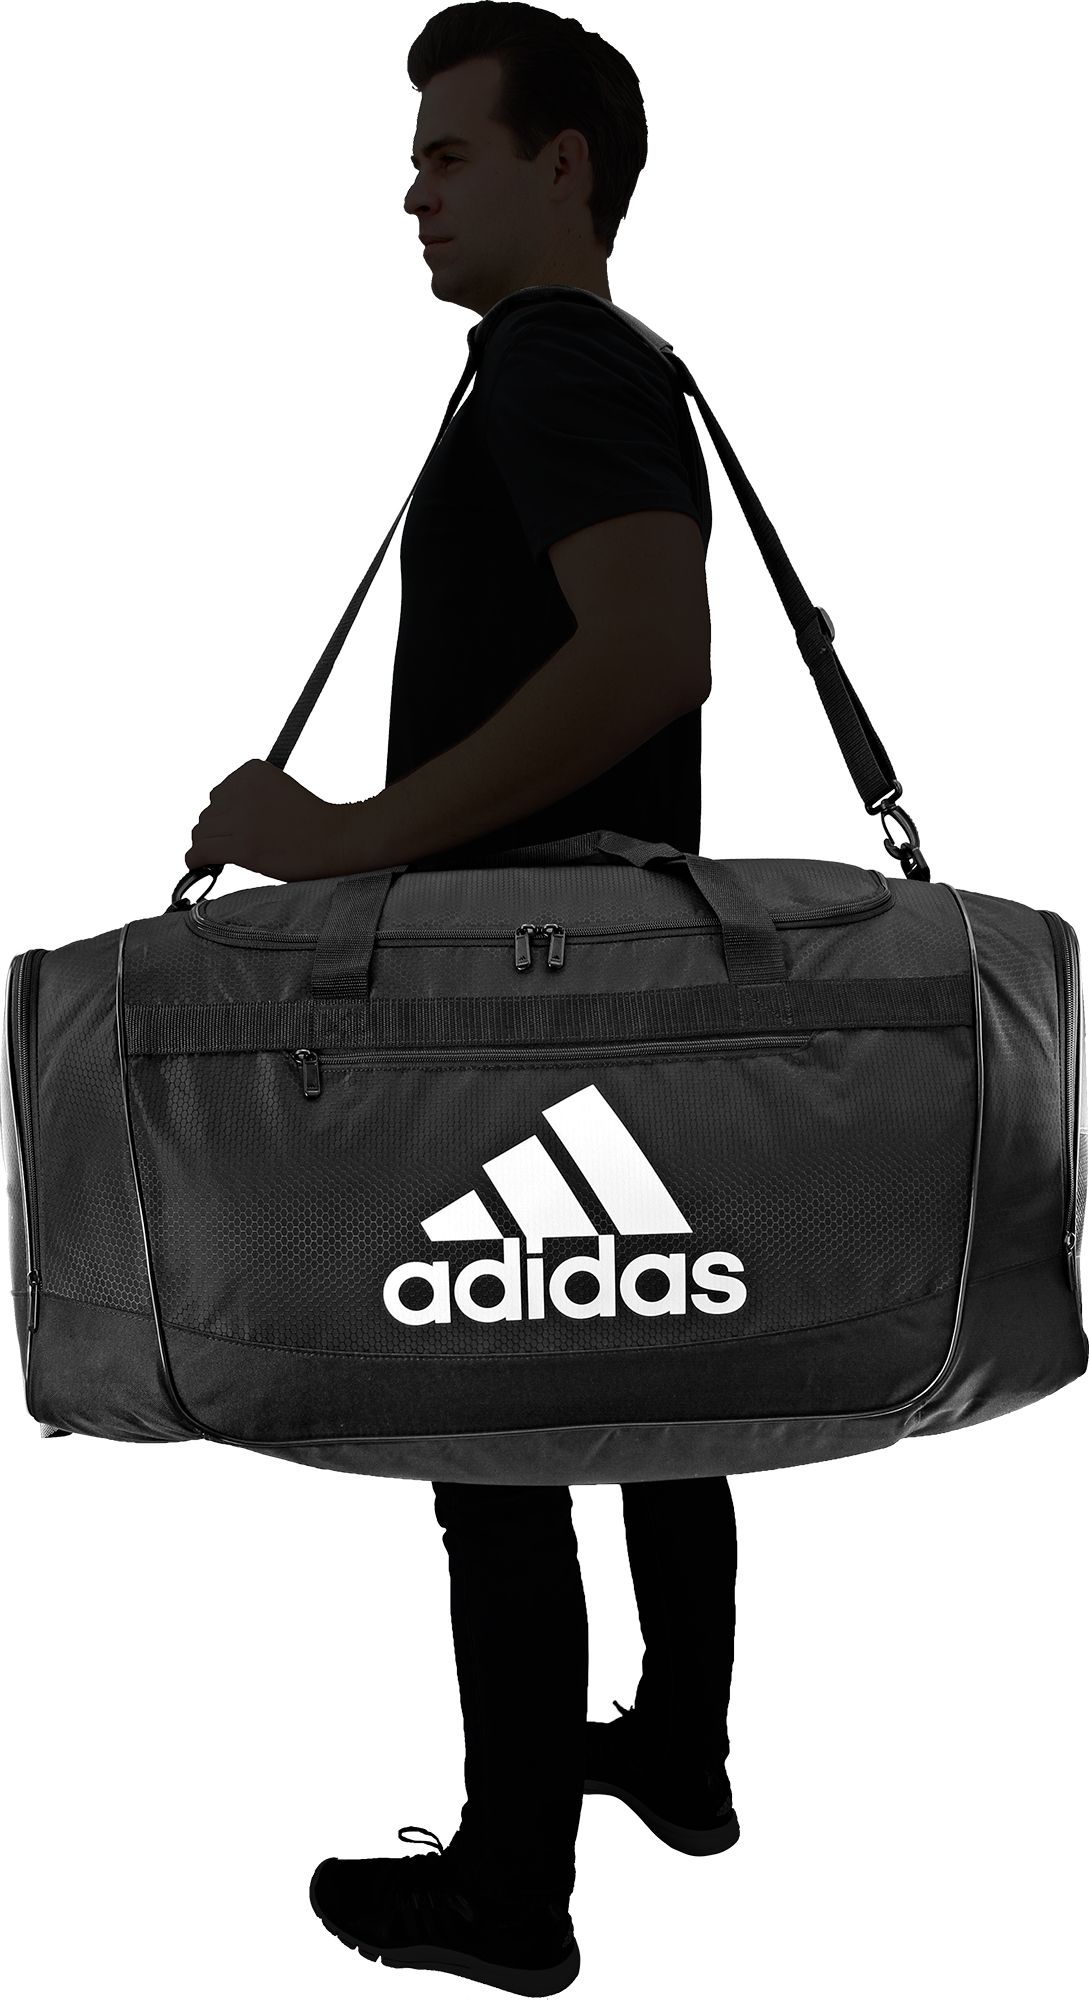 adidas defender iii large duffel bag